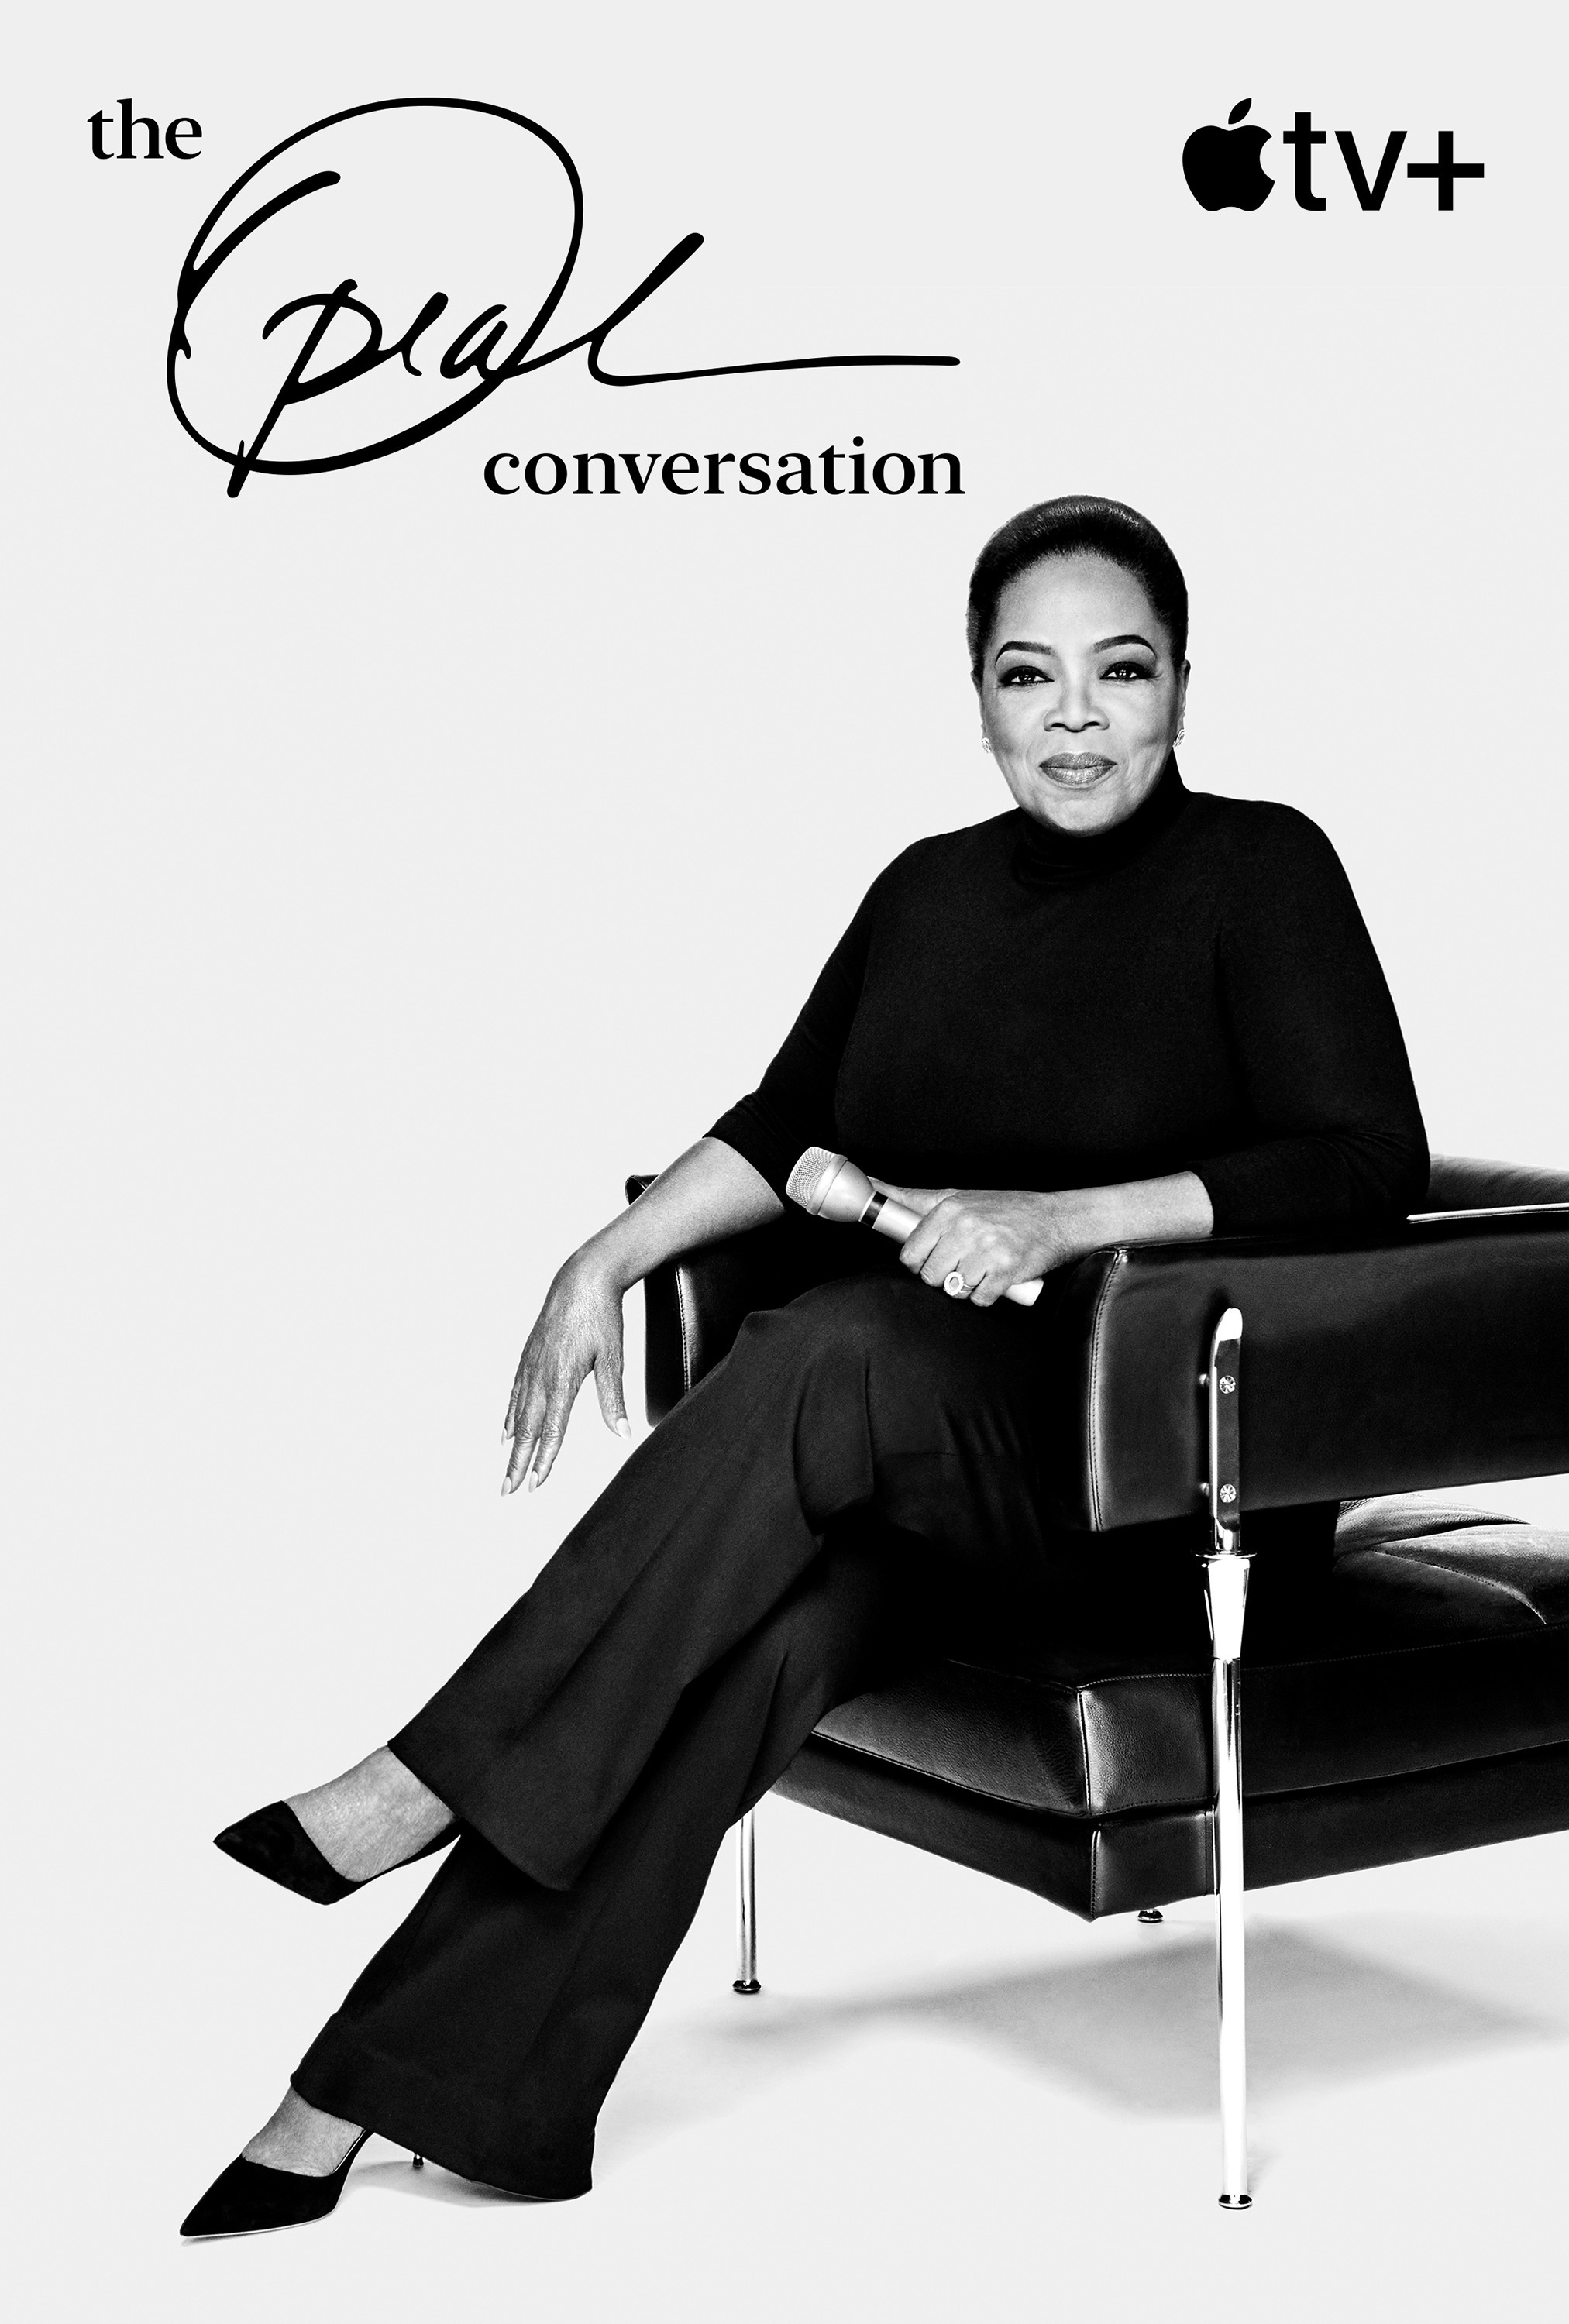 Mega Sized TV Poster Image for The Oprah Conversation 